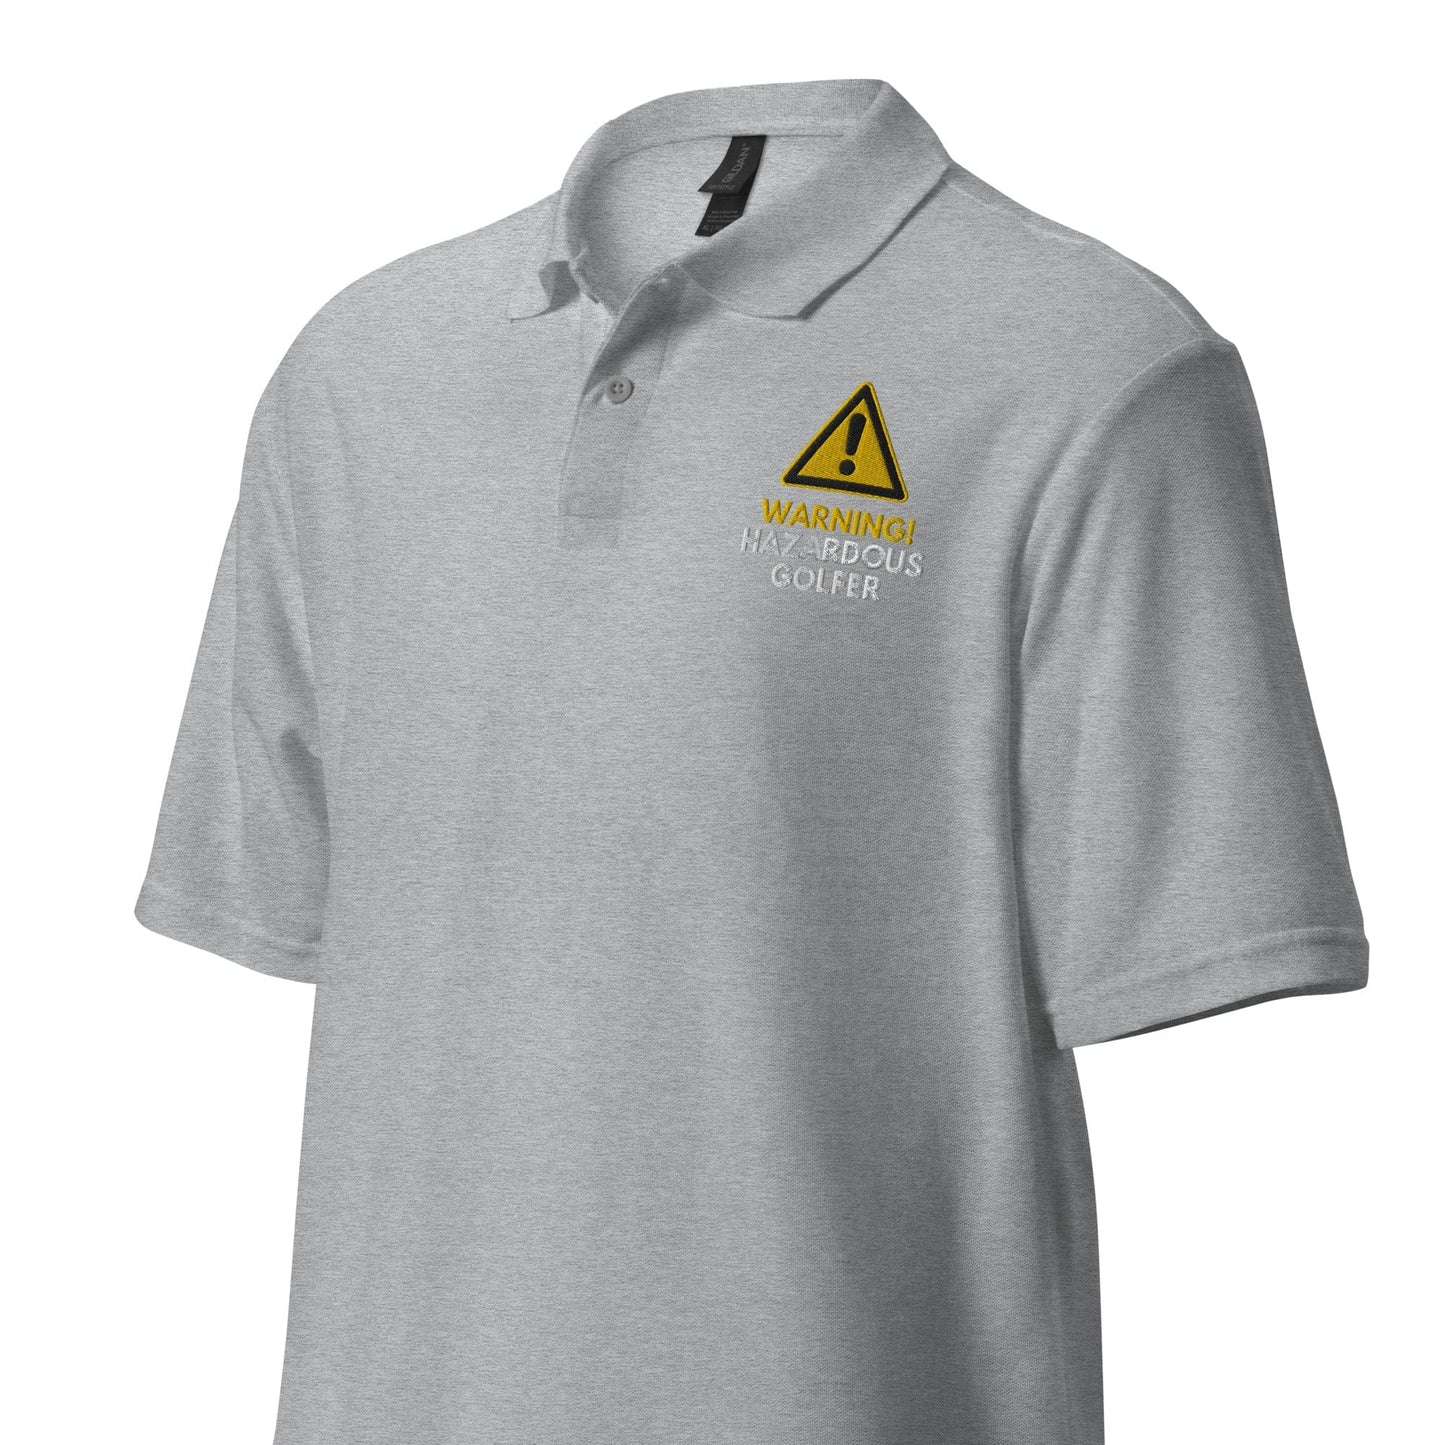 Funny Golfer Gifts  Polo Shirt Warning Hazardous Golfer Unisex Pique Polo Shirt